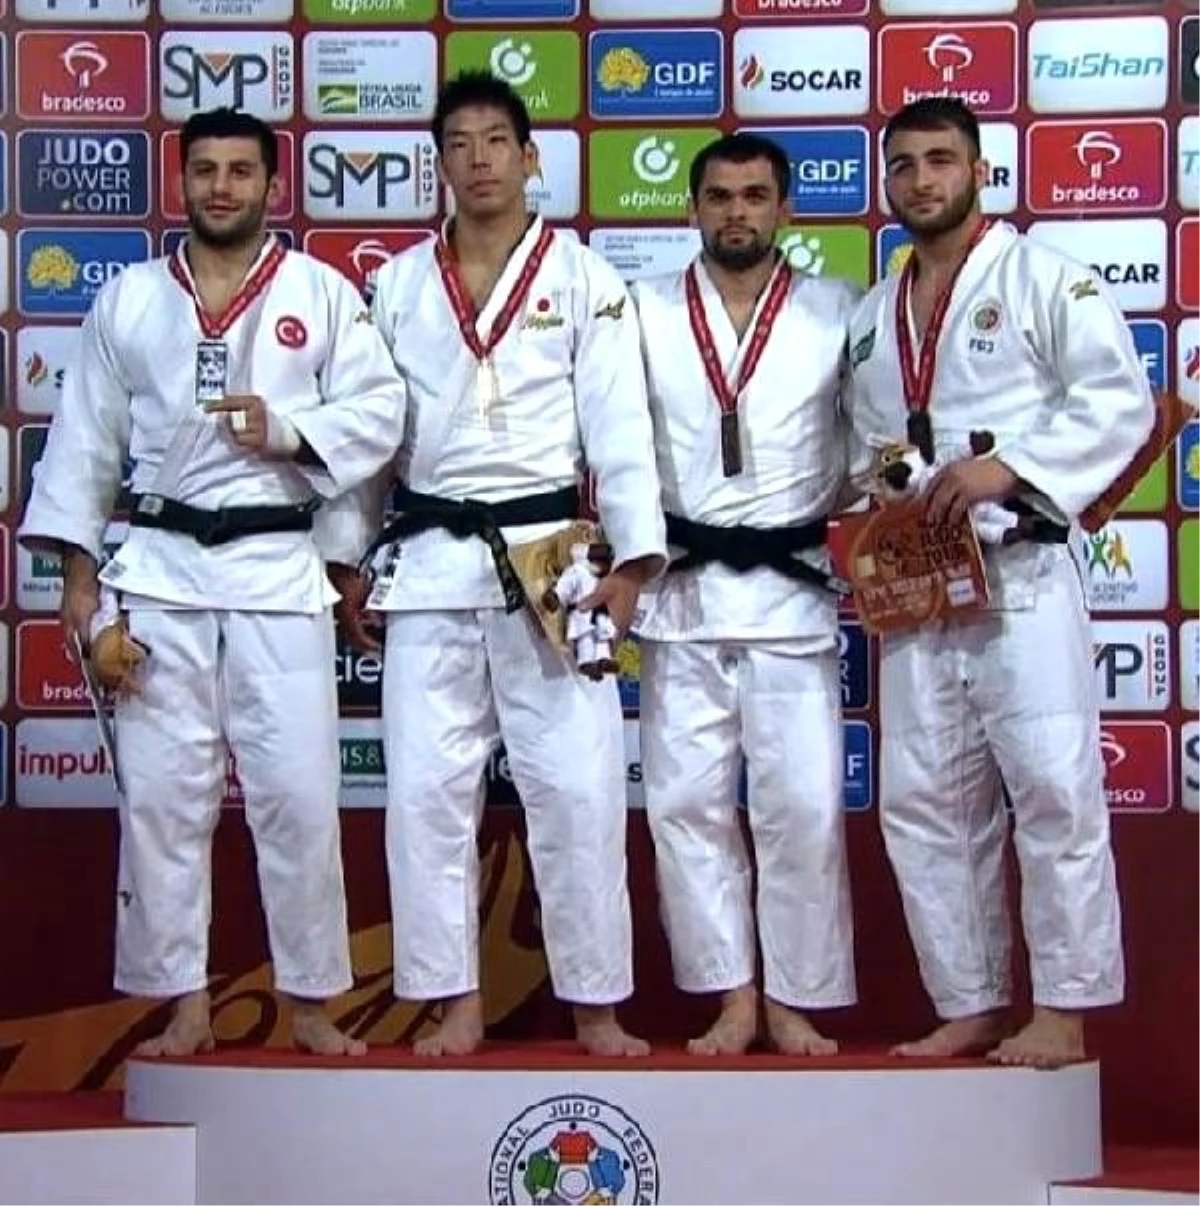 Milli judocu vedat albayrak\'tan gümüş madalya